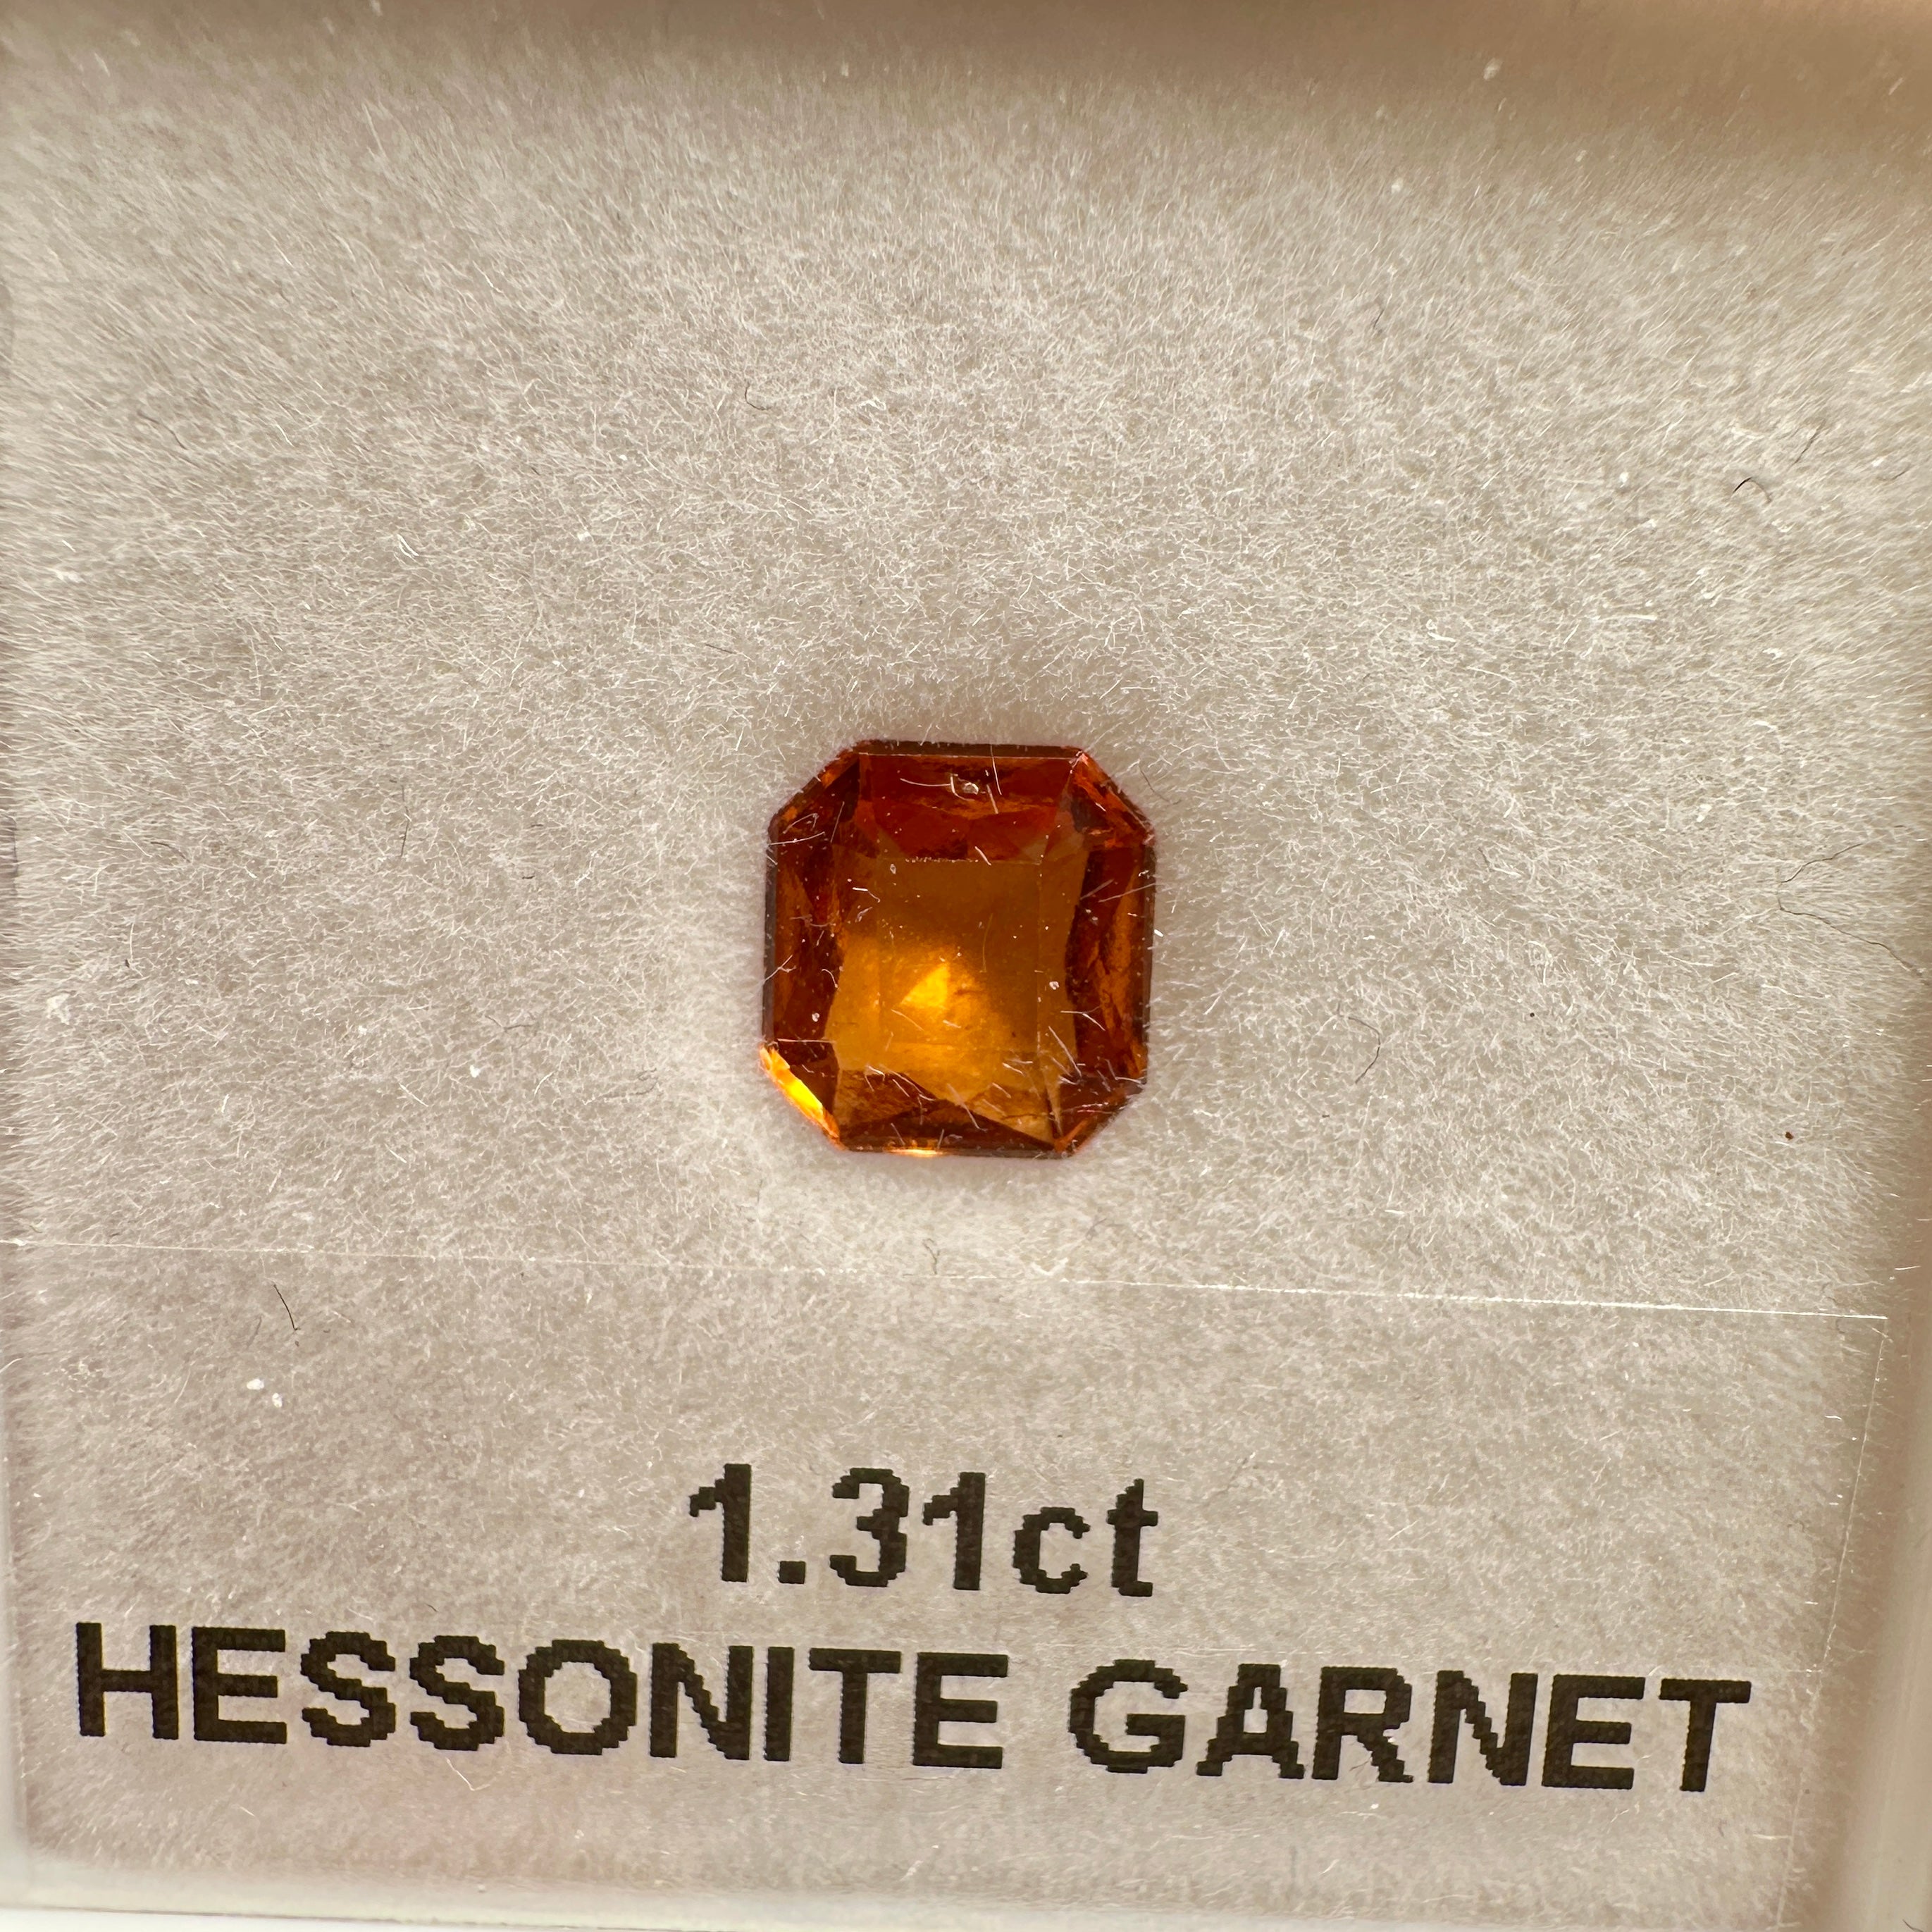 1.31ct Hessonite Garnet, Untreated Unheated, native cut